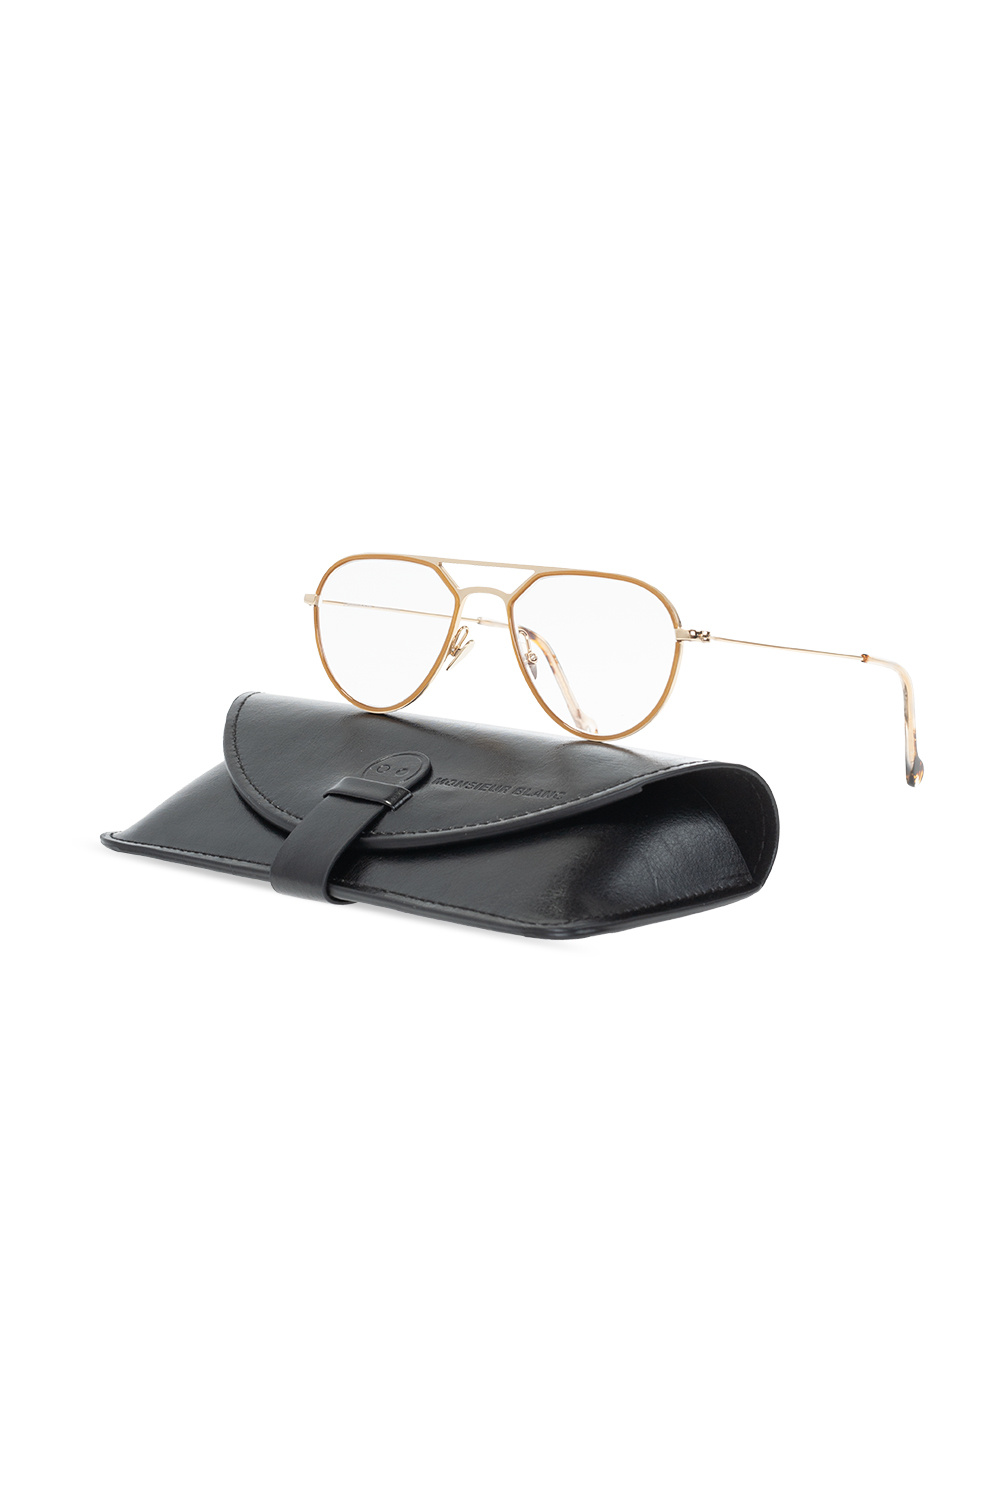 Monsieur Blanc ‘Claude’ optical glasses